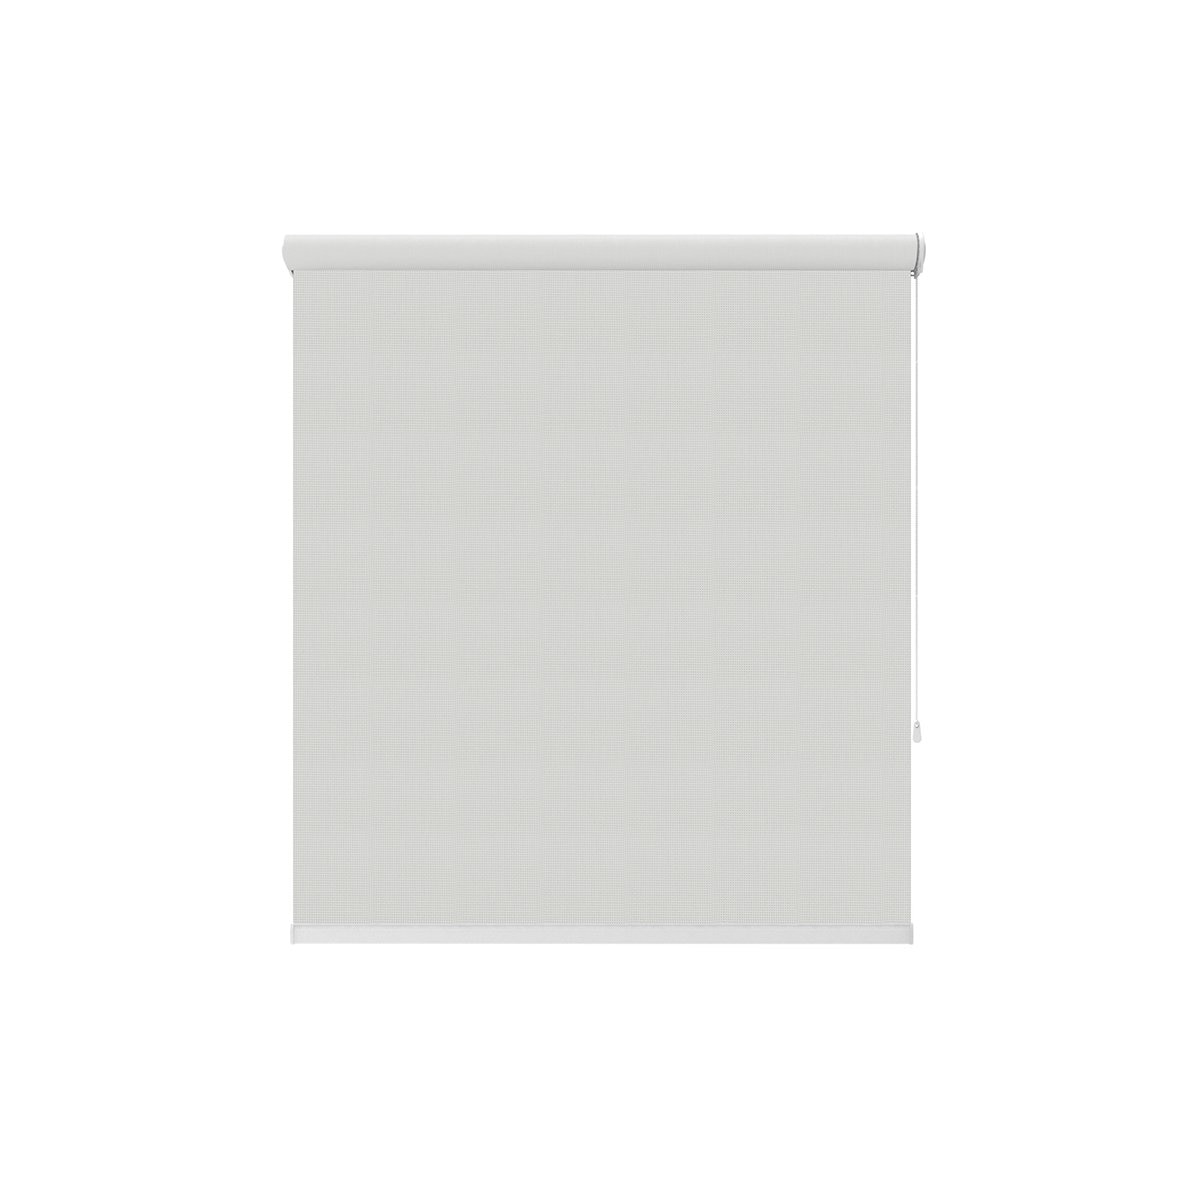 Persiana Enrollable Translucida Screen Phifer 4500 New 1.20 X 1.80 Blanco Classic